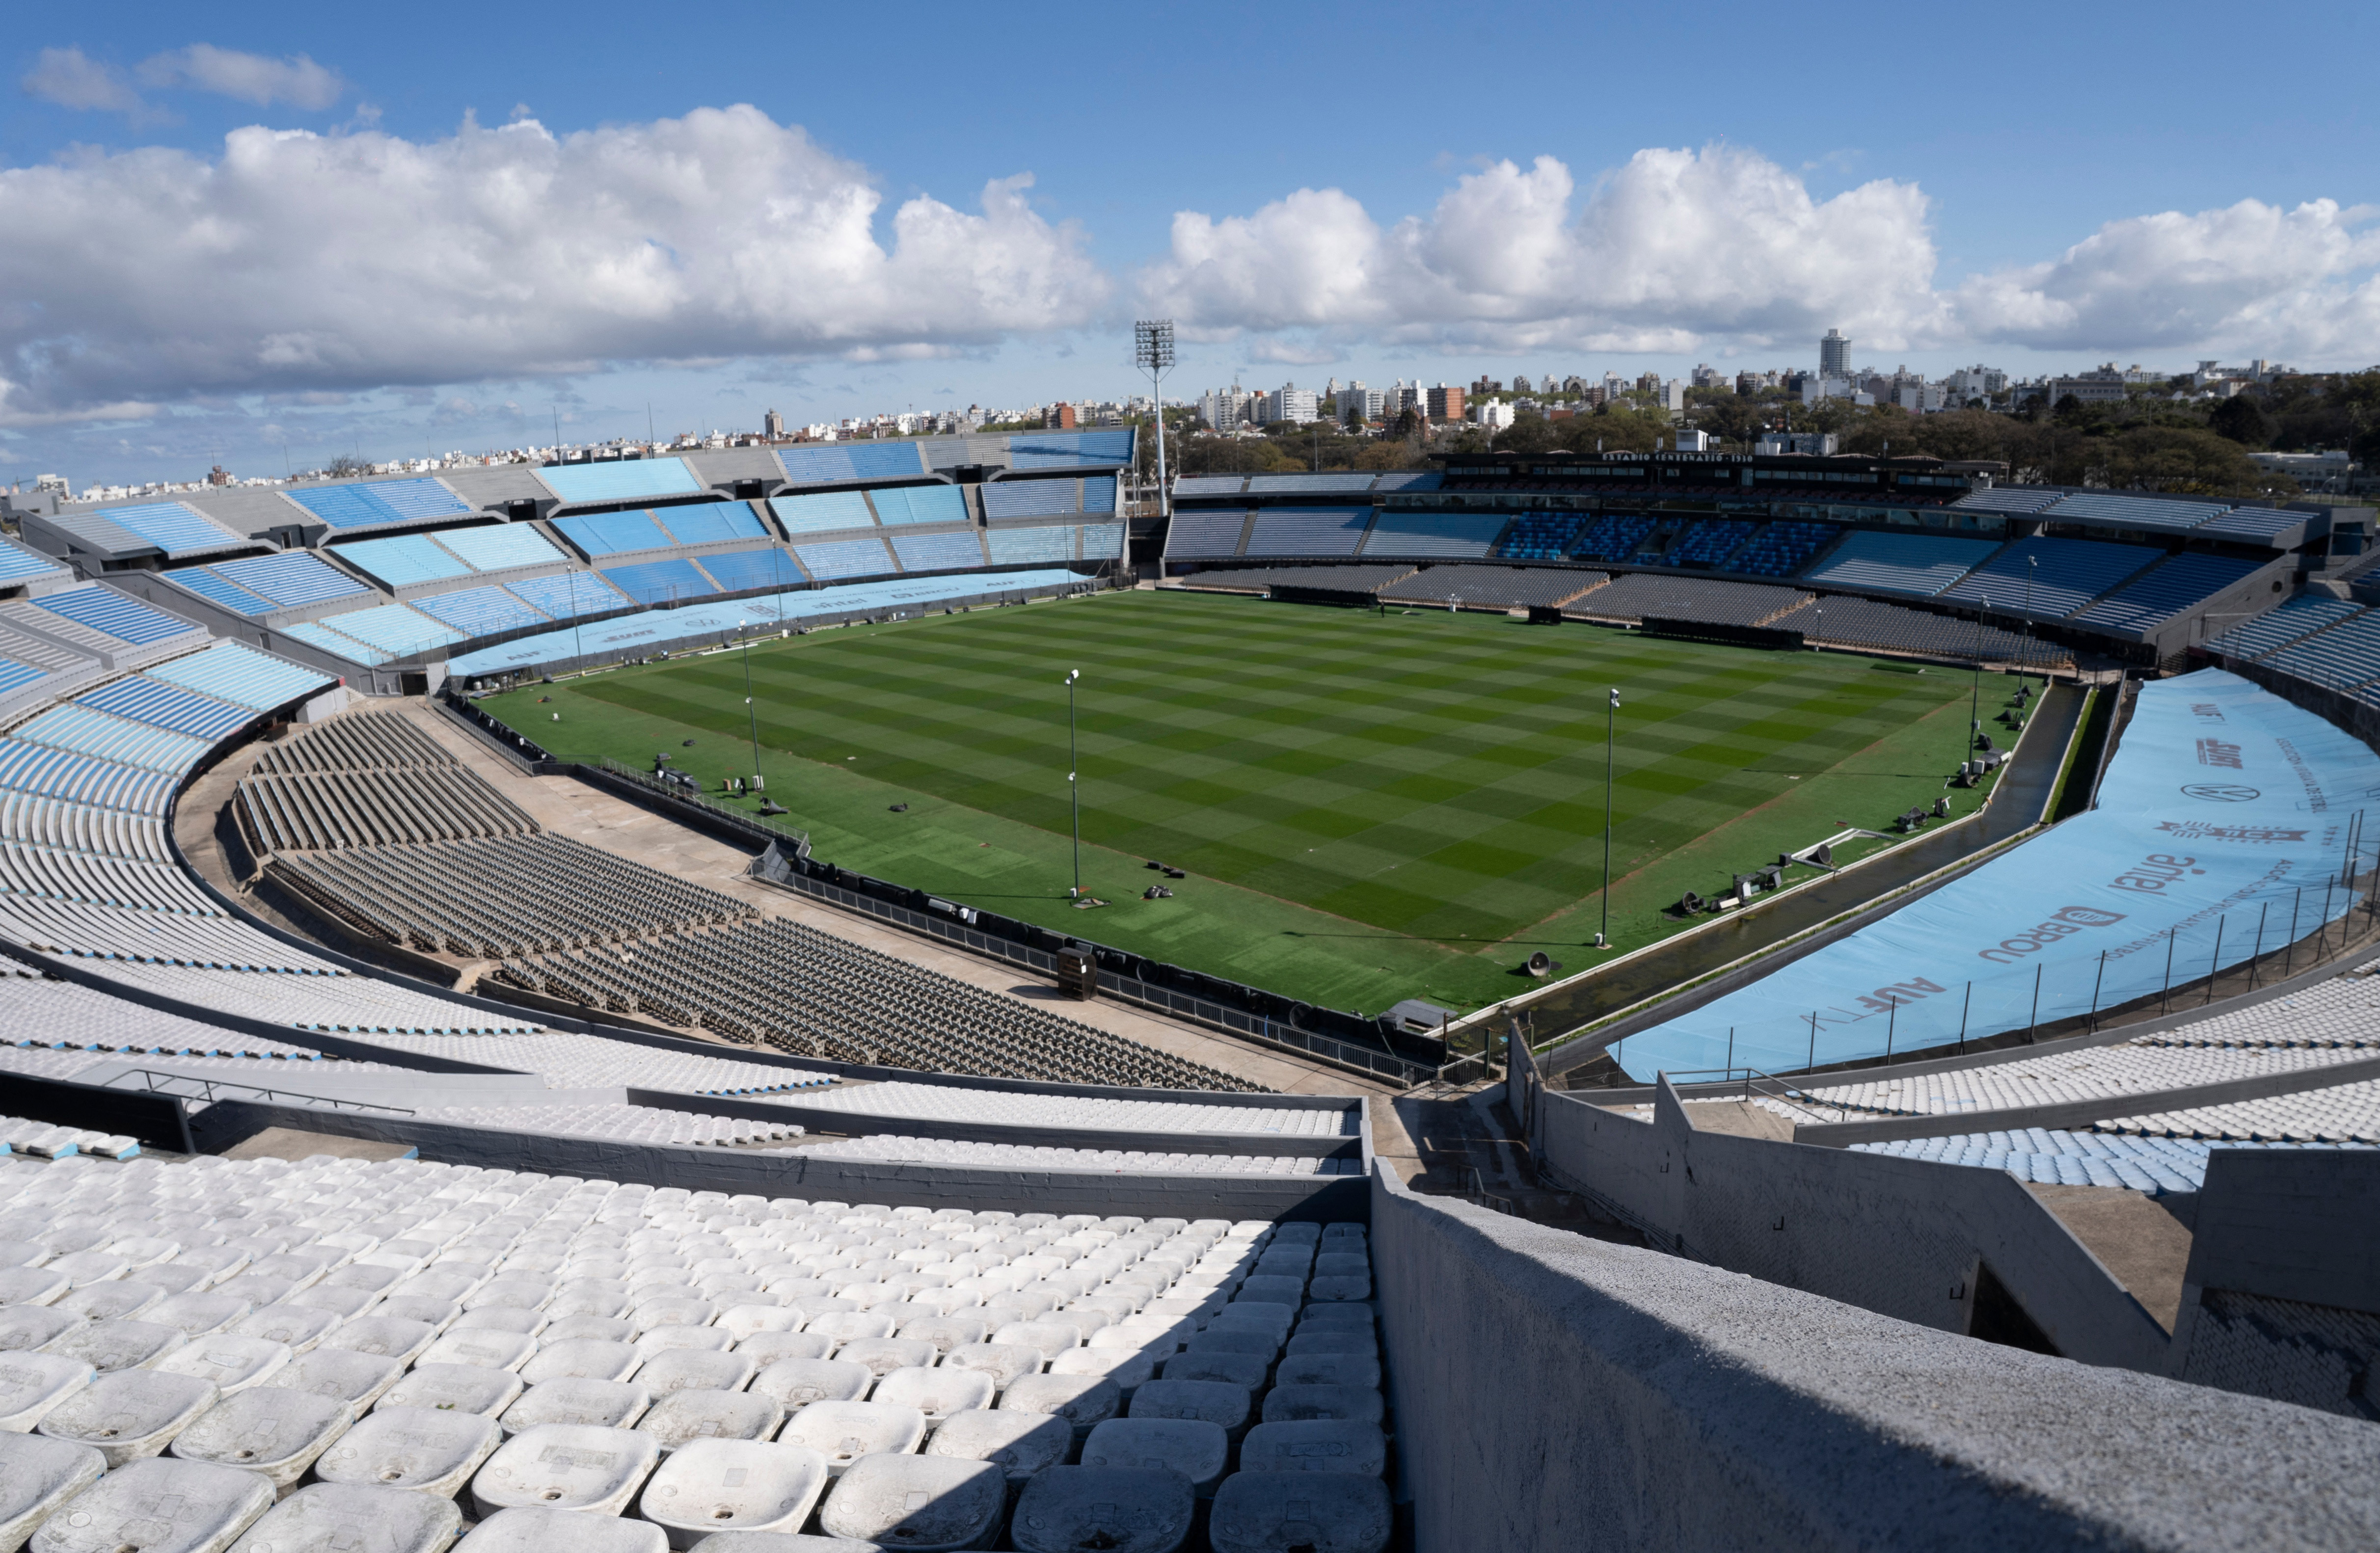 Argentina, Paraguay, Uruguay agree on 2030 World Cup bid